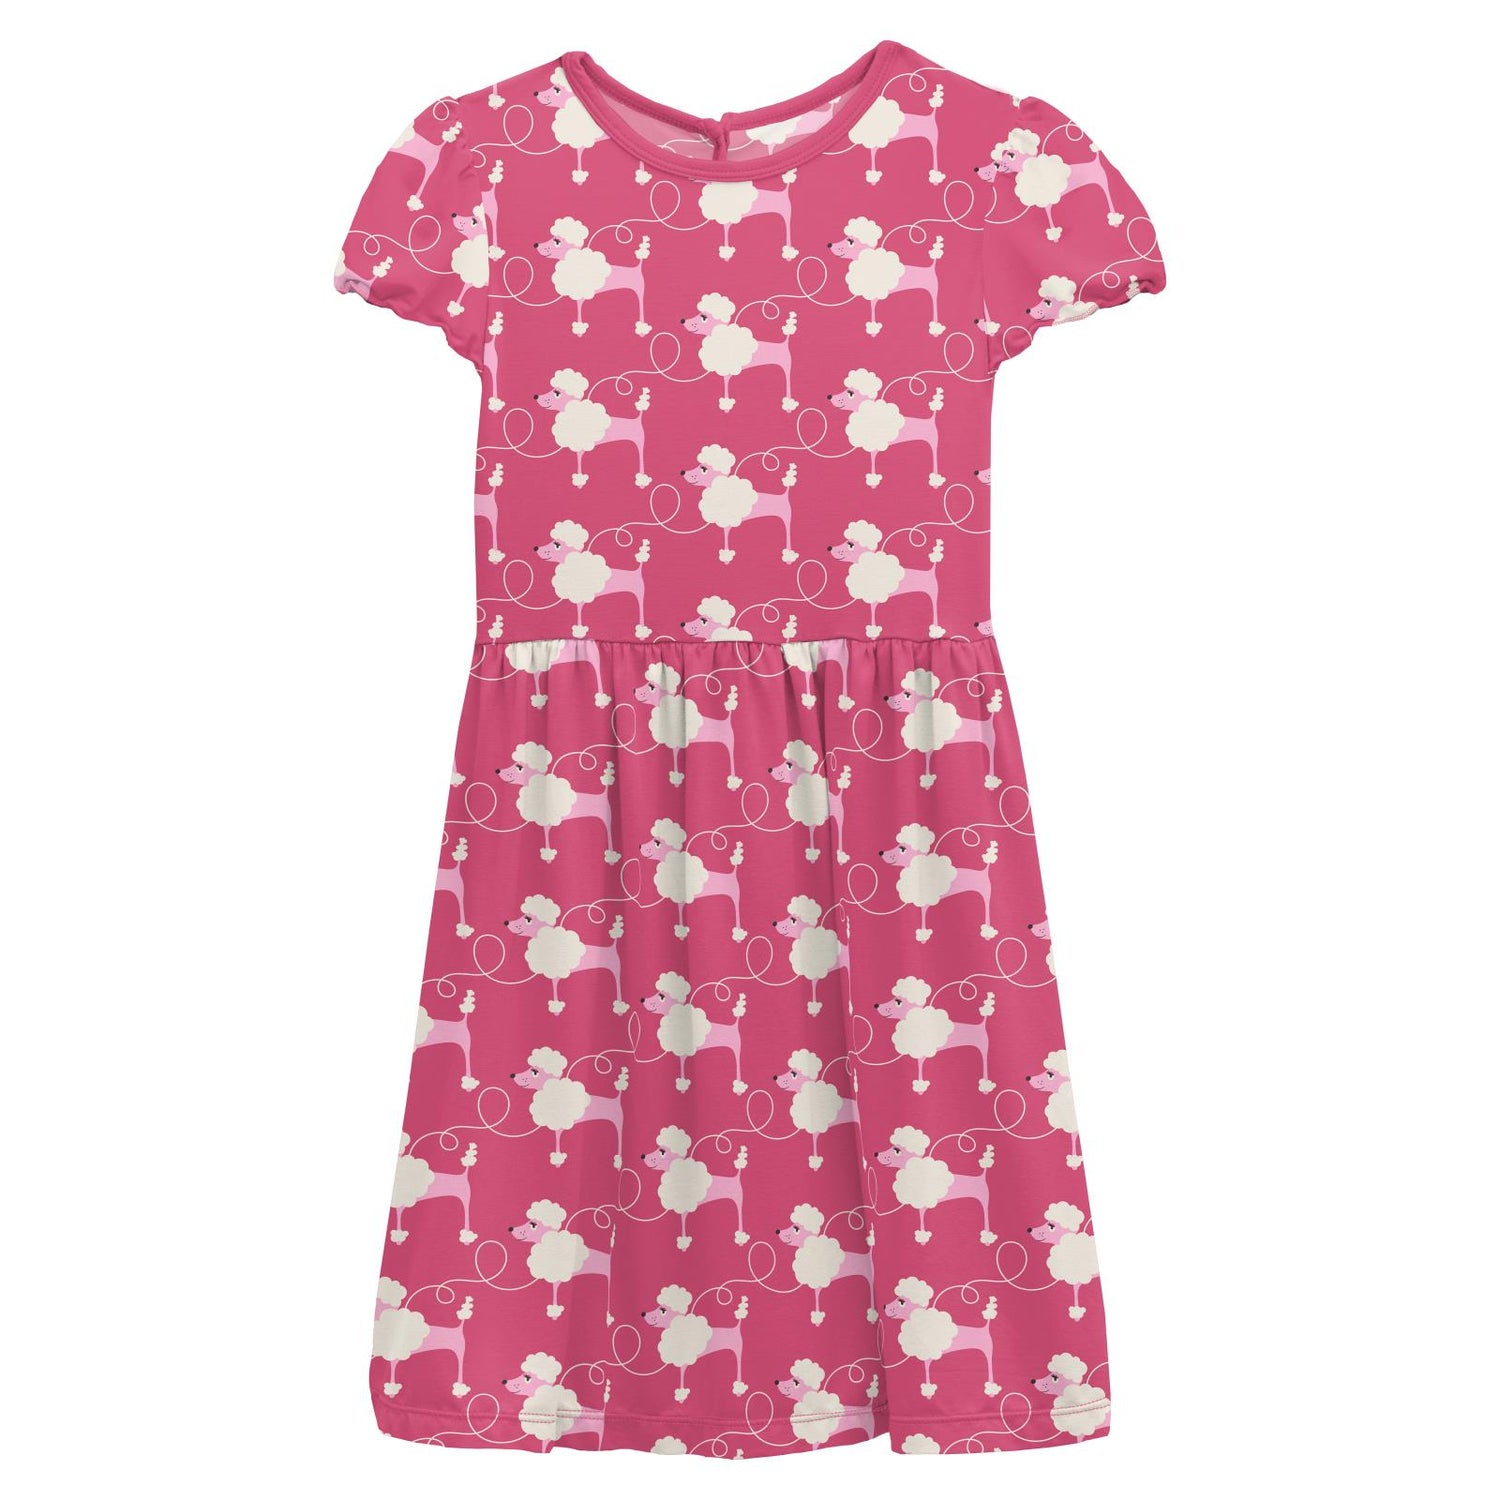 Print Flutter Sleeve Twirl Dress in Flamingo Poodles